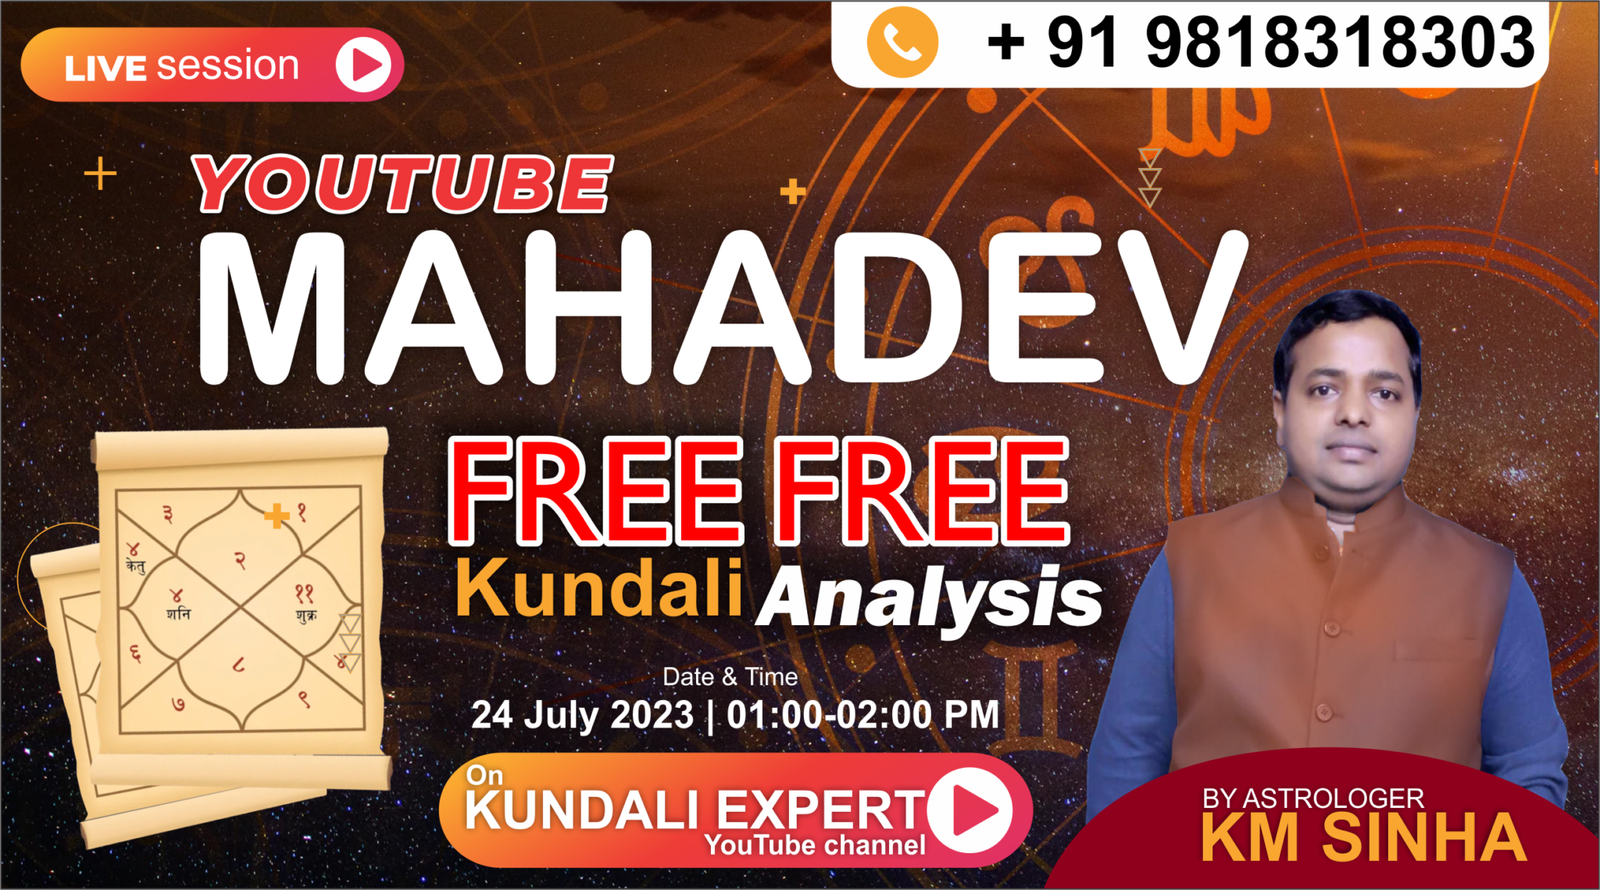 Mahadev Live Session: Free Kundali Analysis on YouTube by Astrologer KM Sinha  24 July 2023